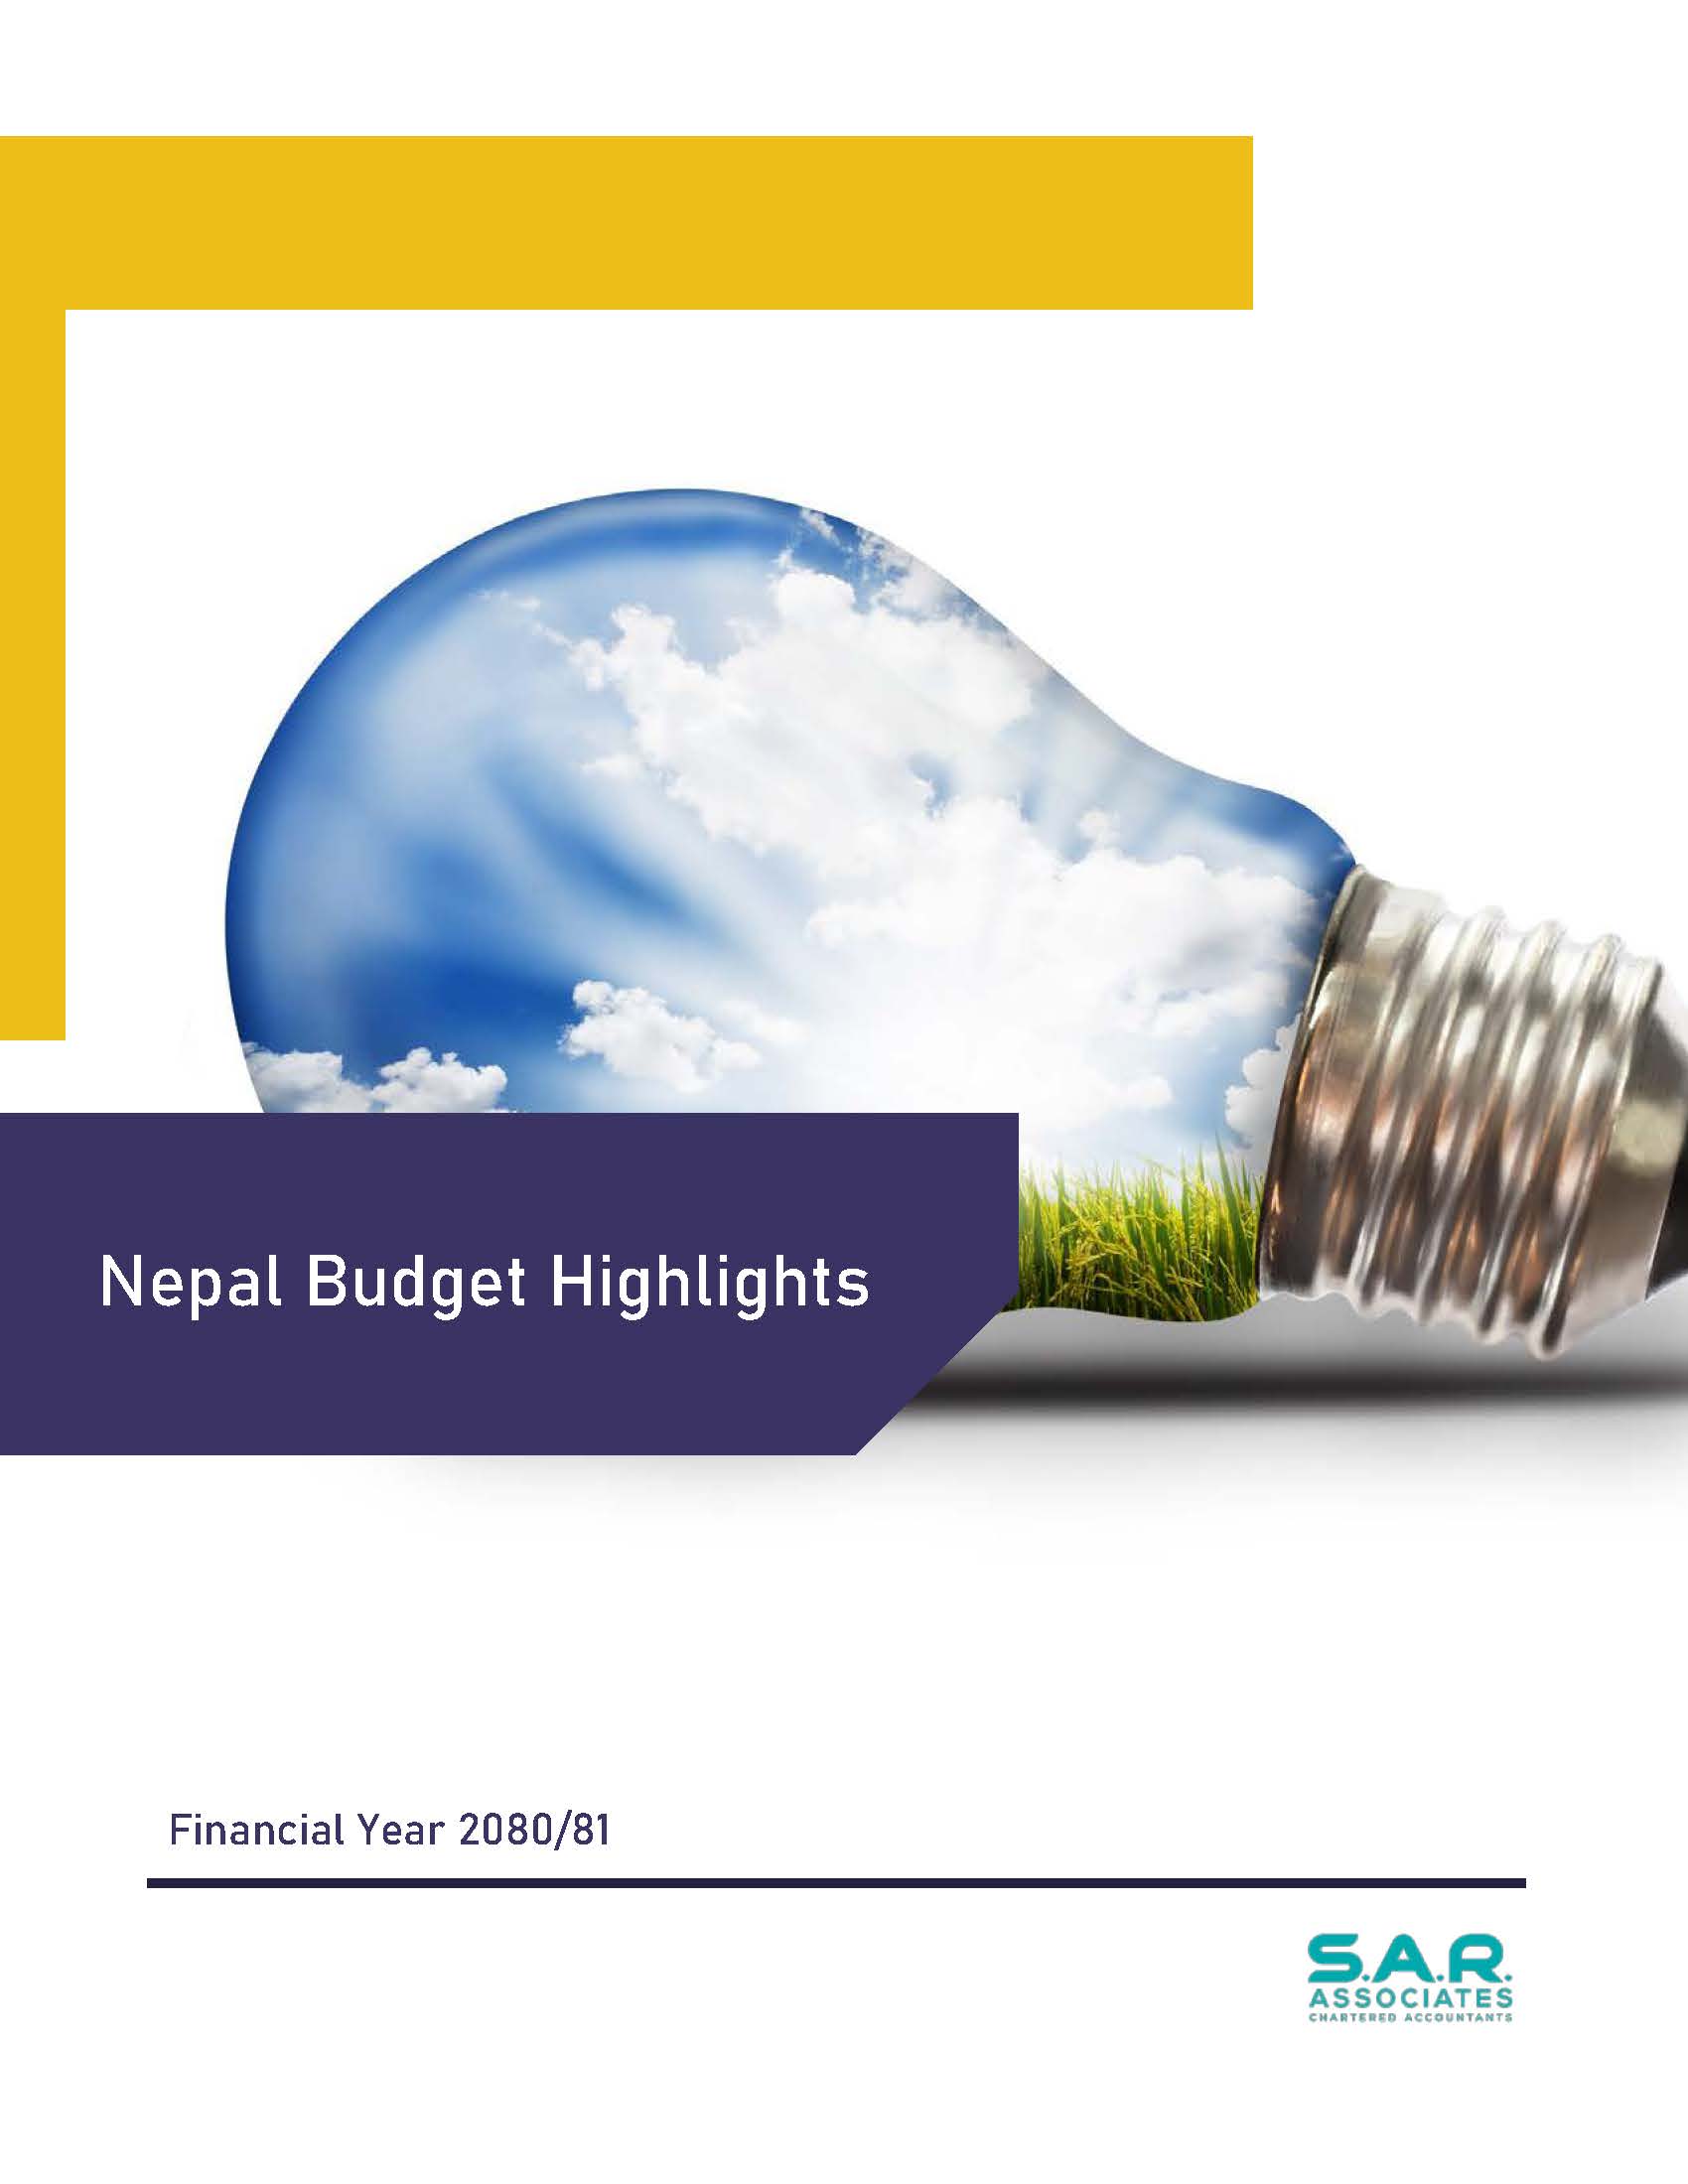 Nepal Budget Highlights_FY 2080_81